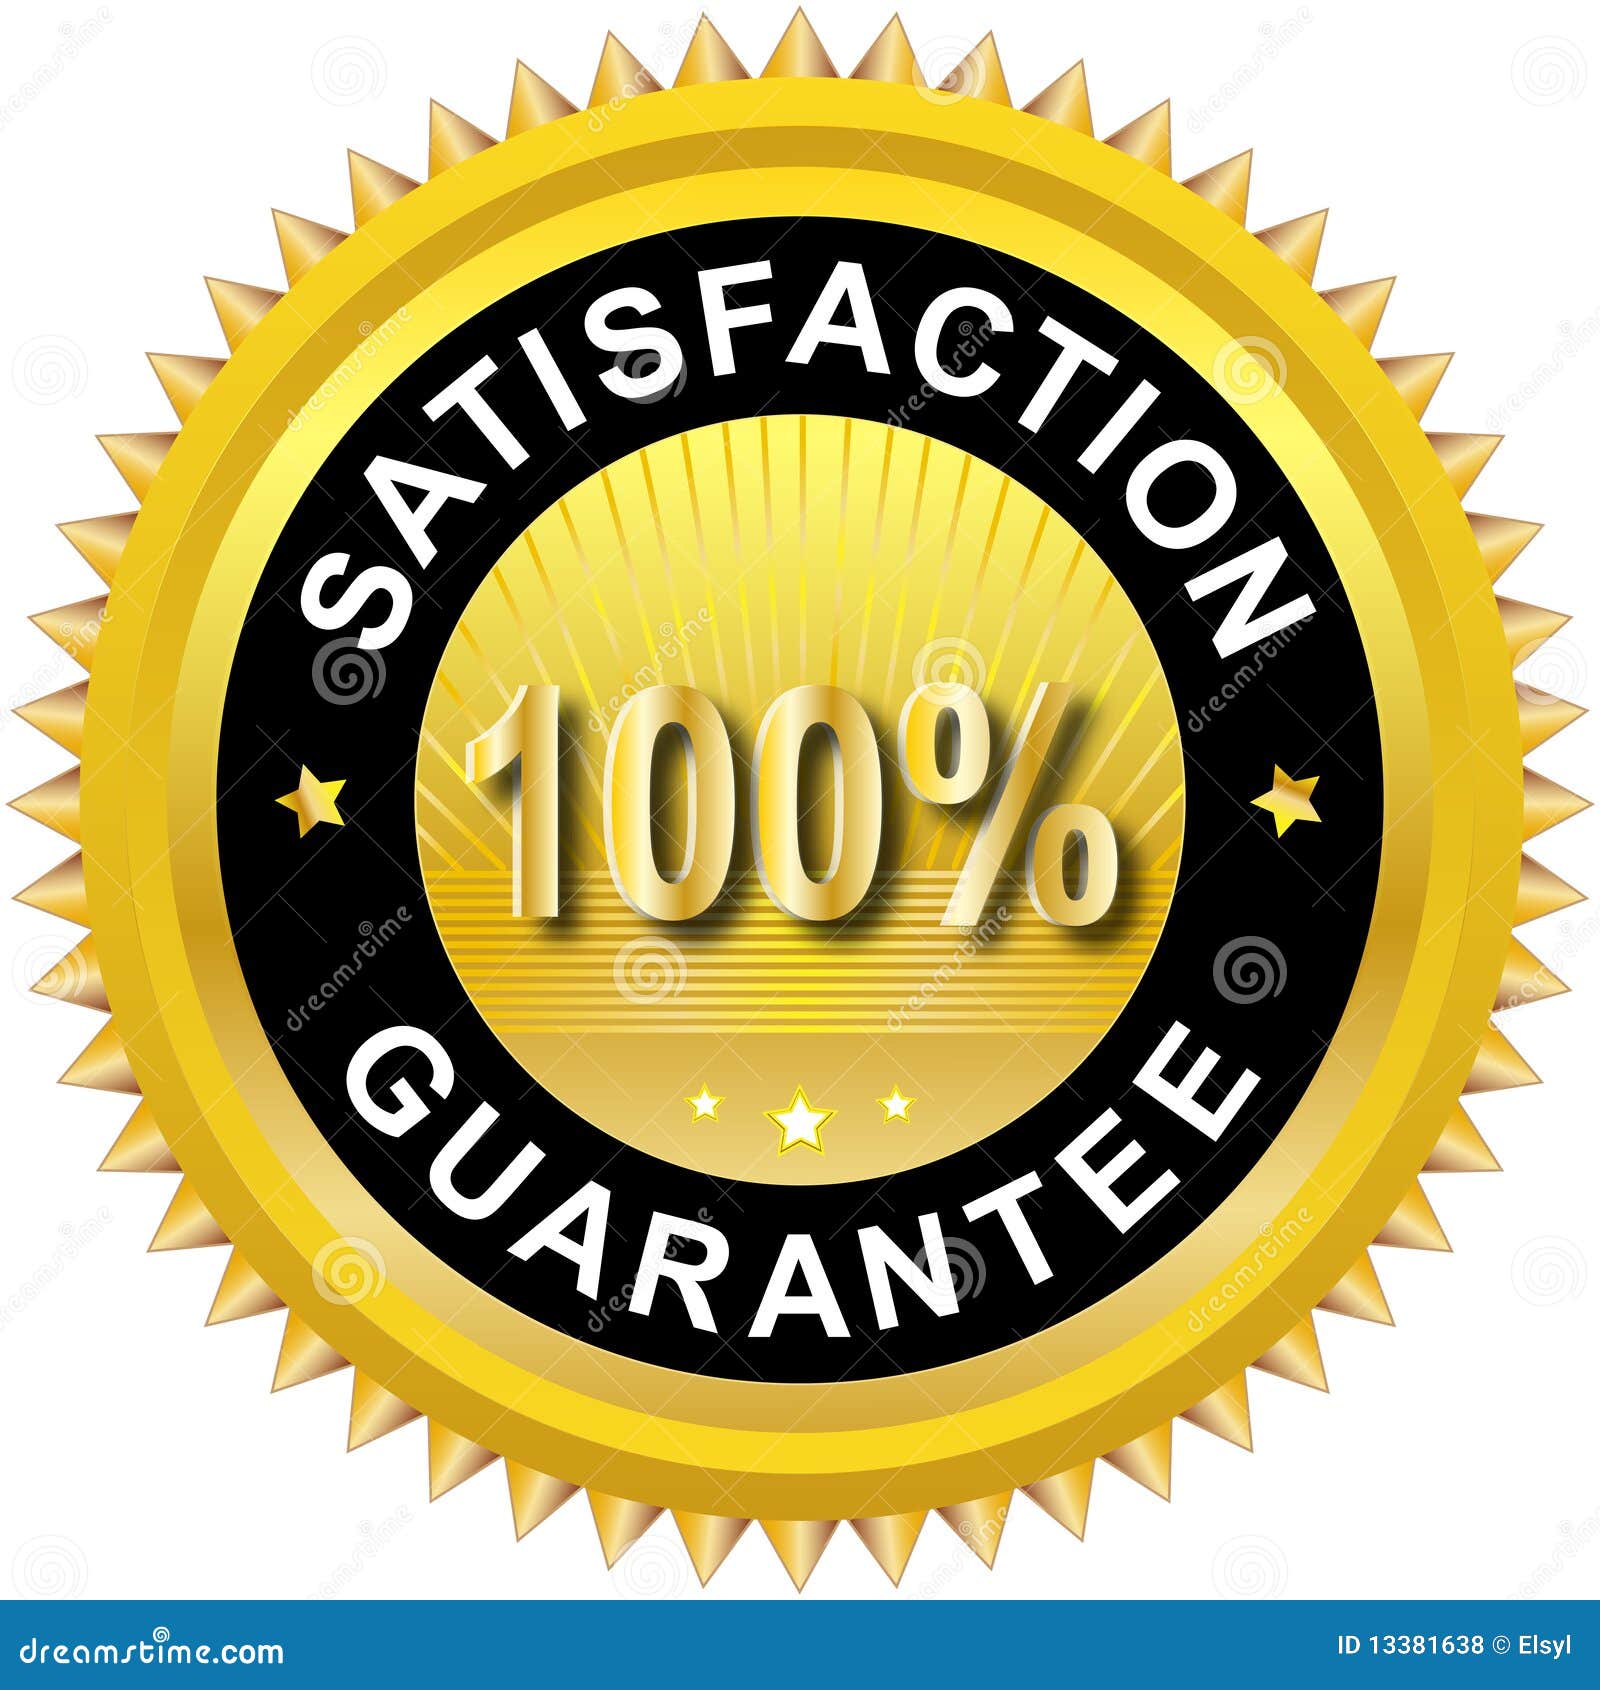 satisfaction guarantee label